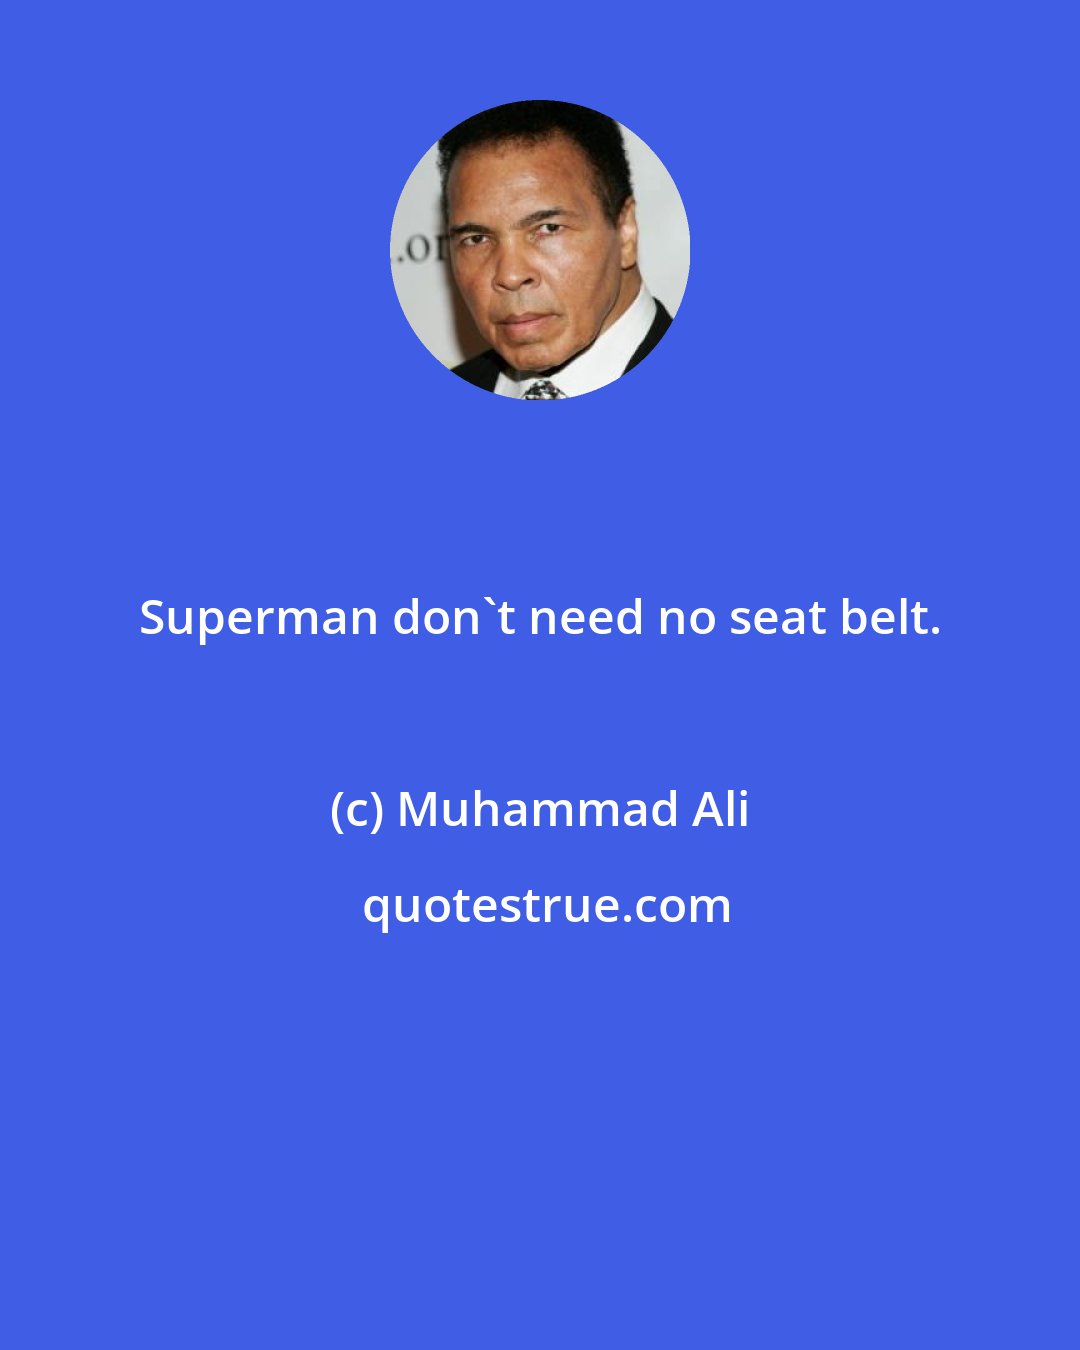 Muhammad Ali: Superman don't need no seat belt.